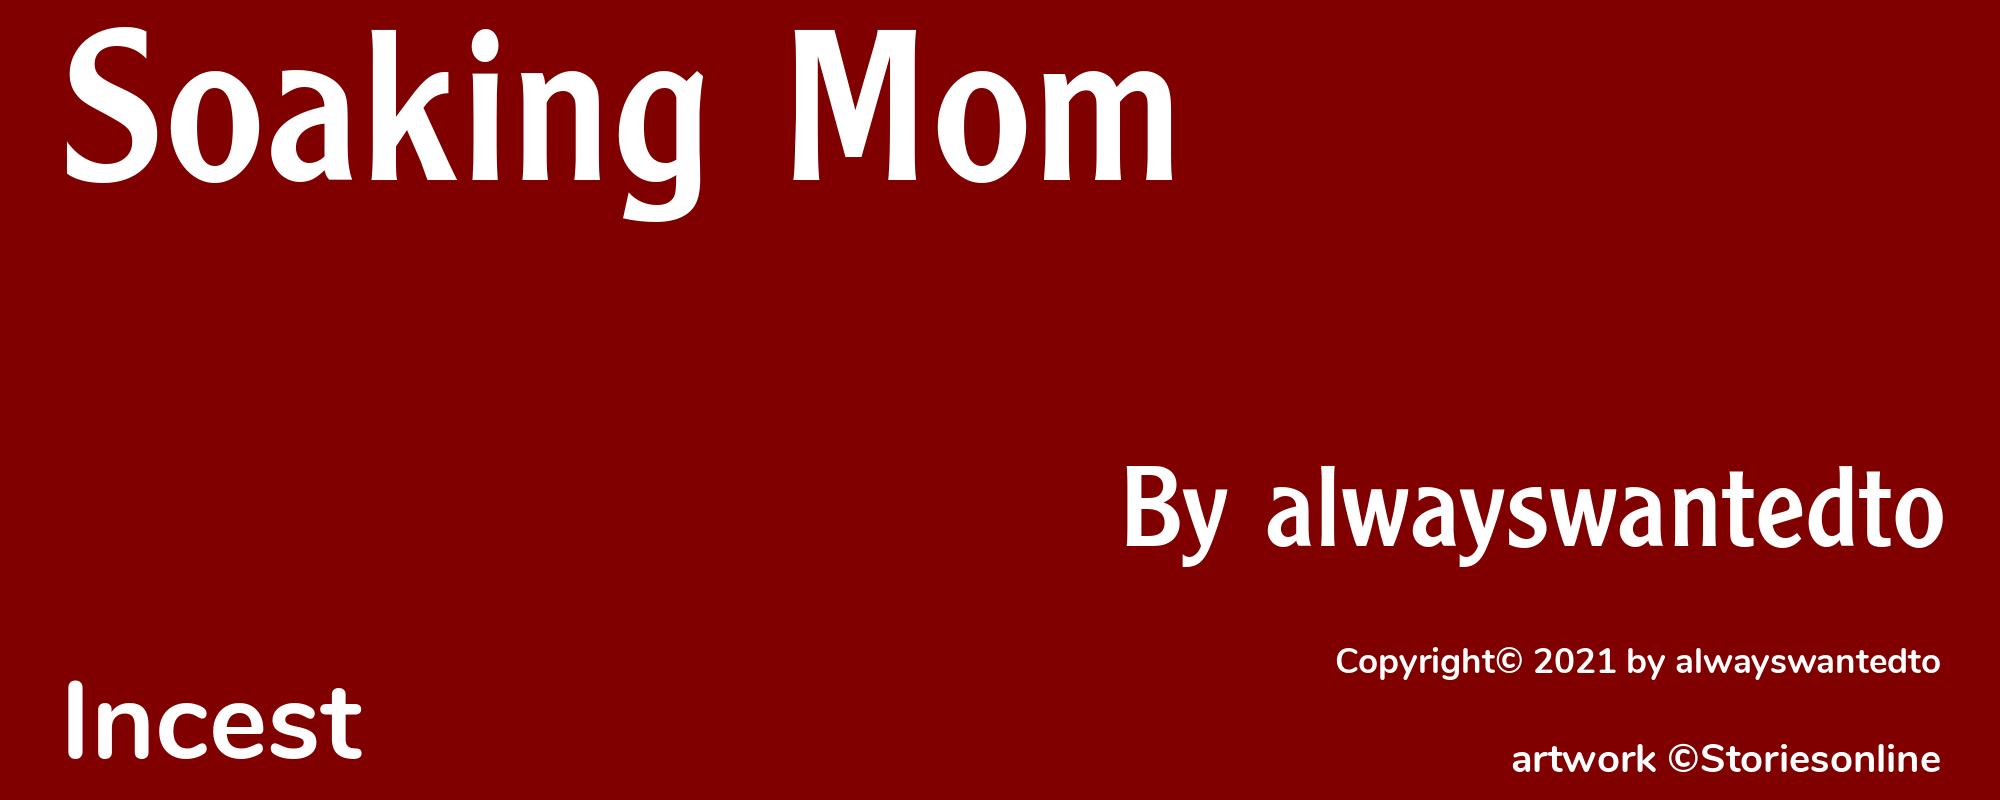 Soaking Mom - Cover